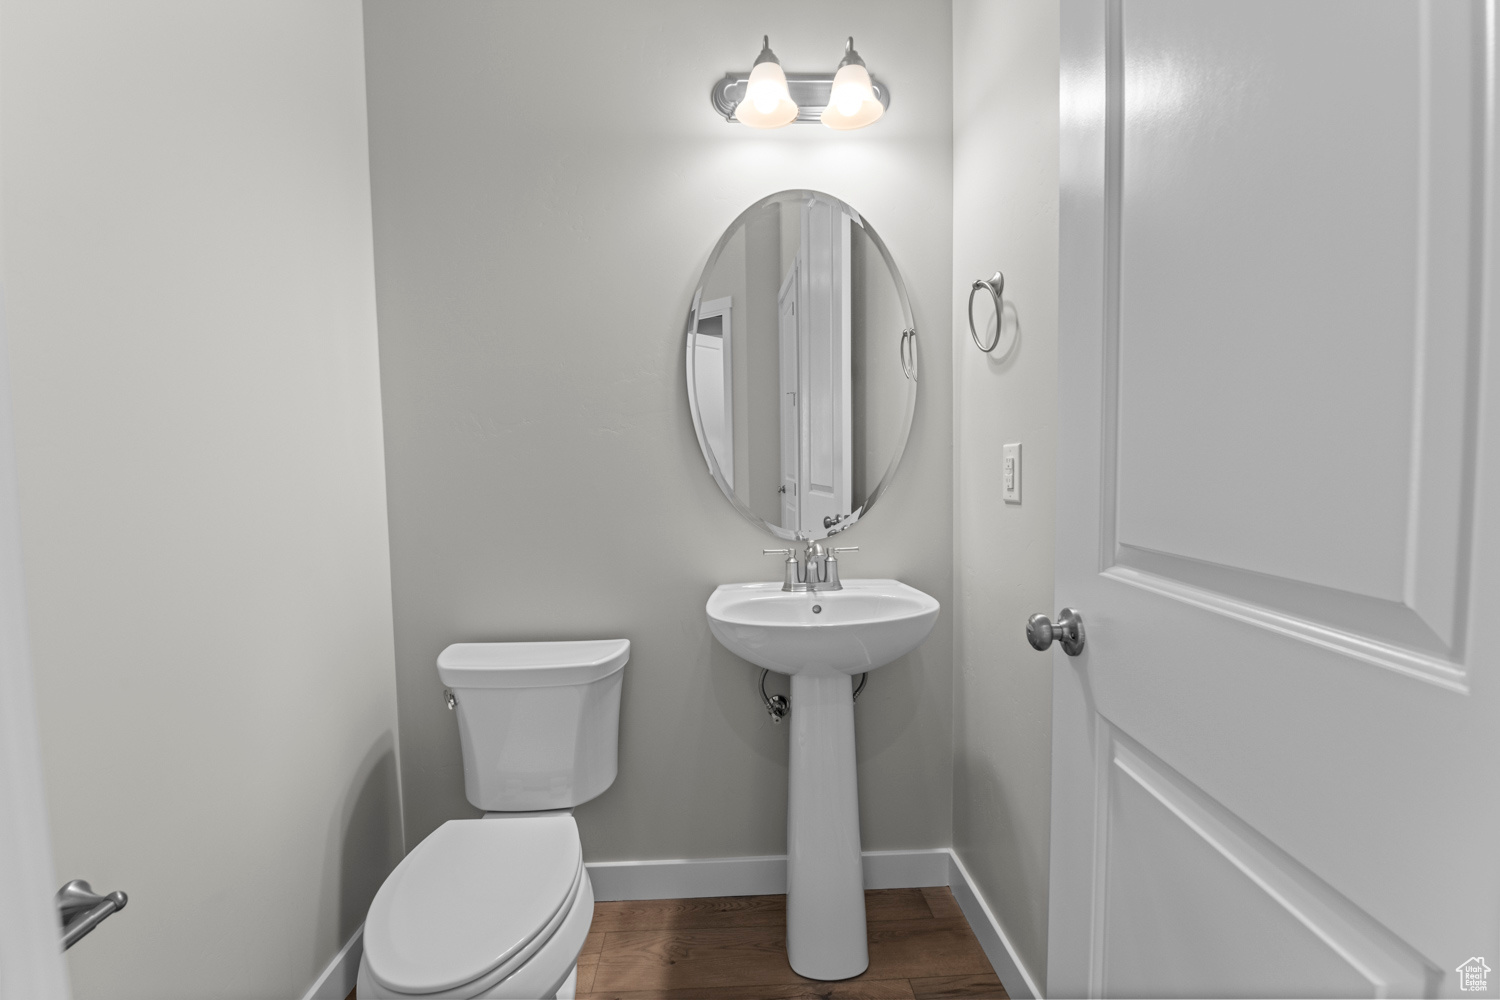 Bathroom featuring toilet and hardwood / wood-style flooring